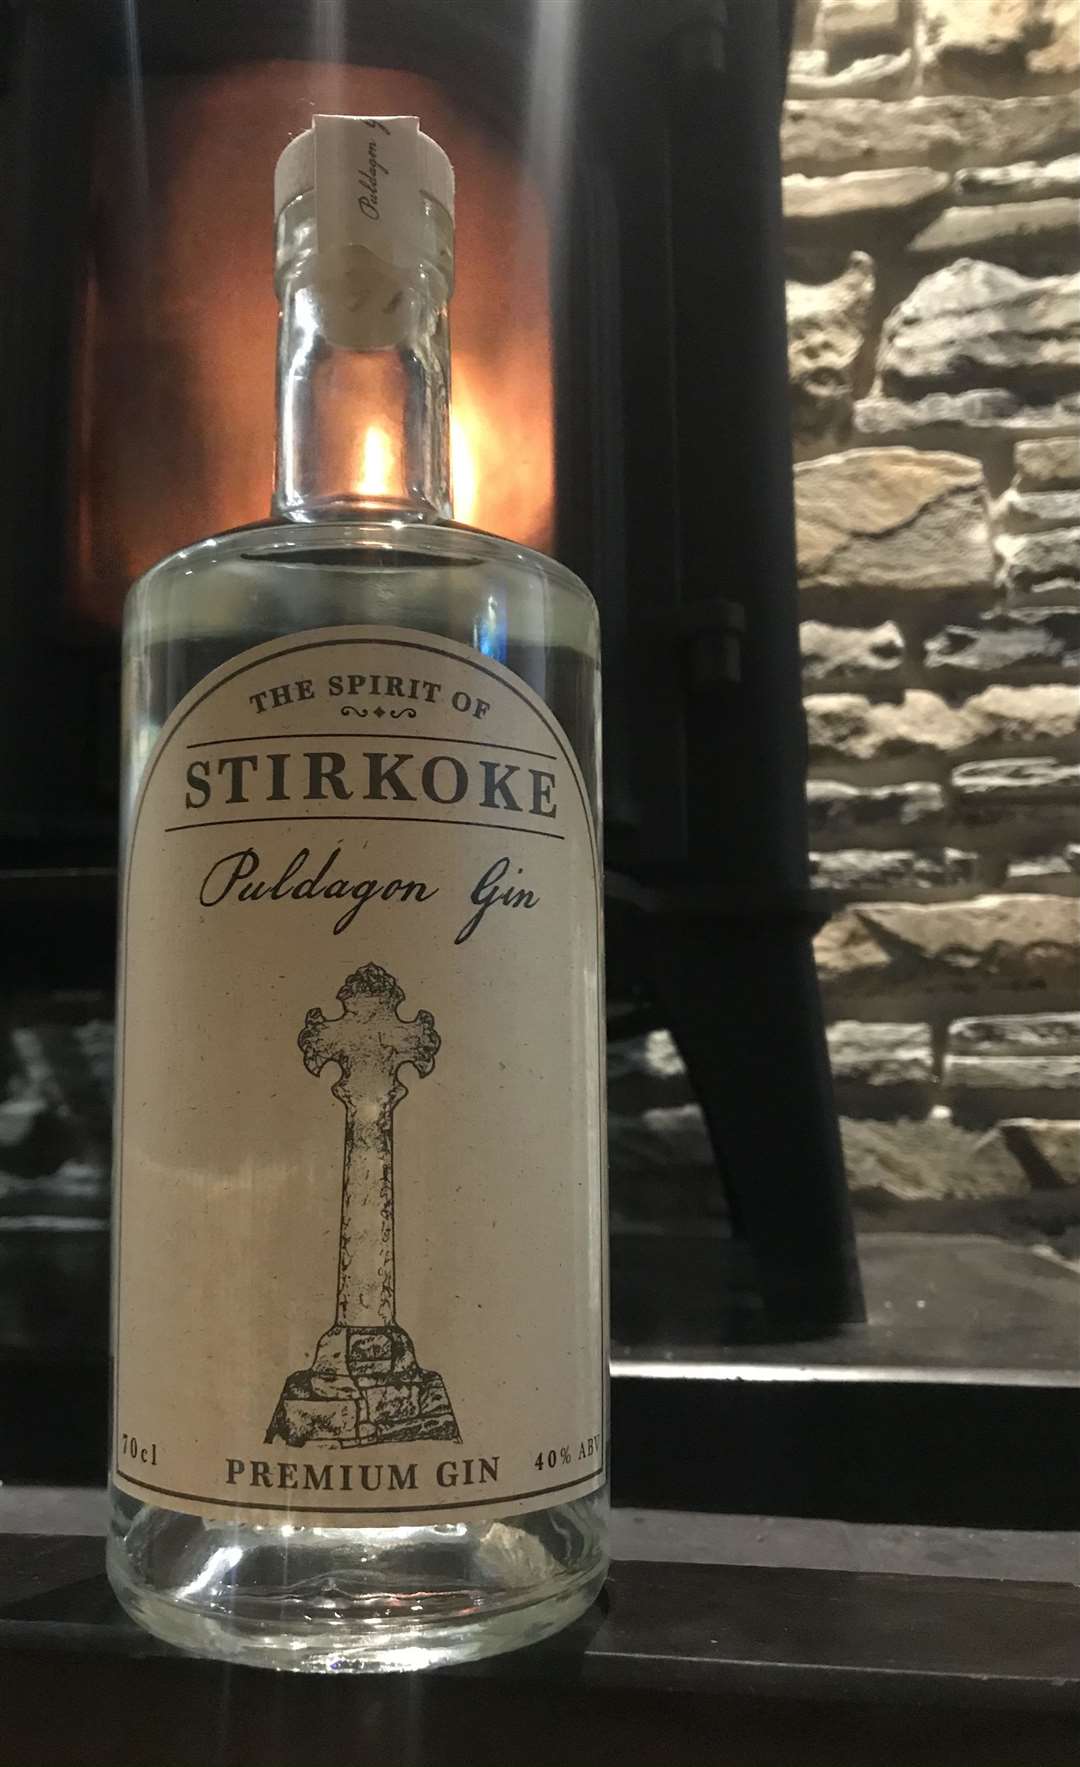 Spirit of Stirkoke - the new Puldagon gin.